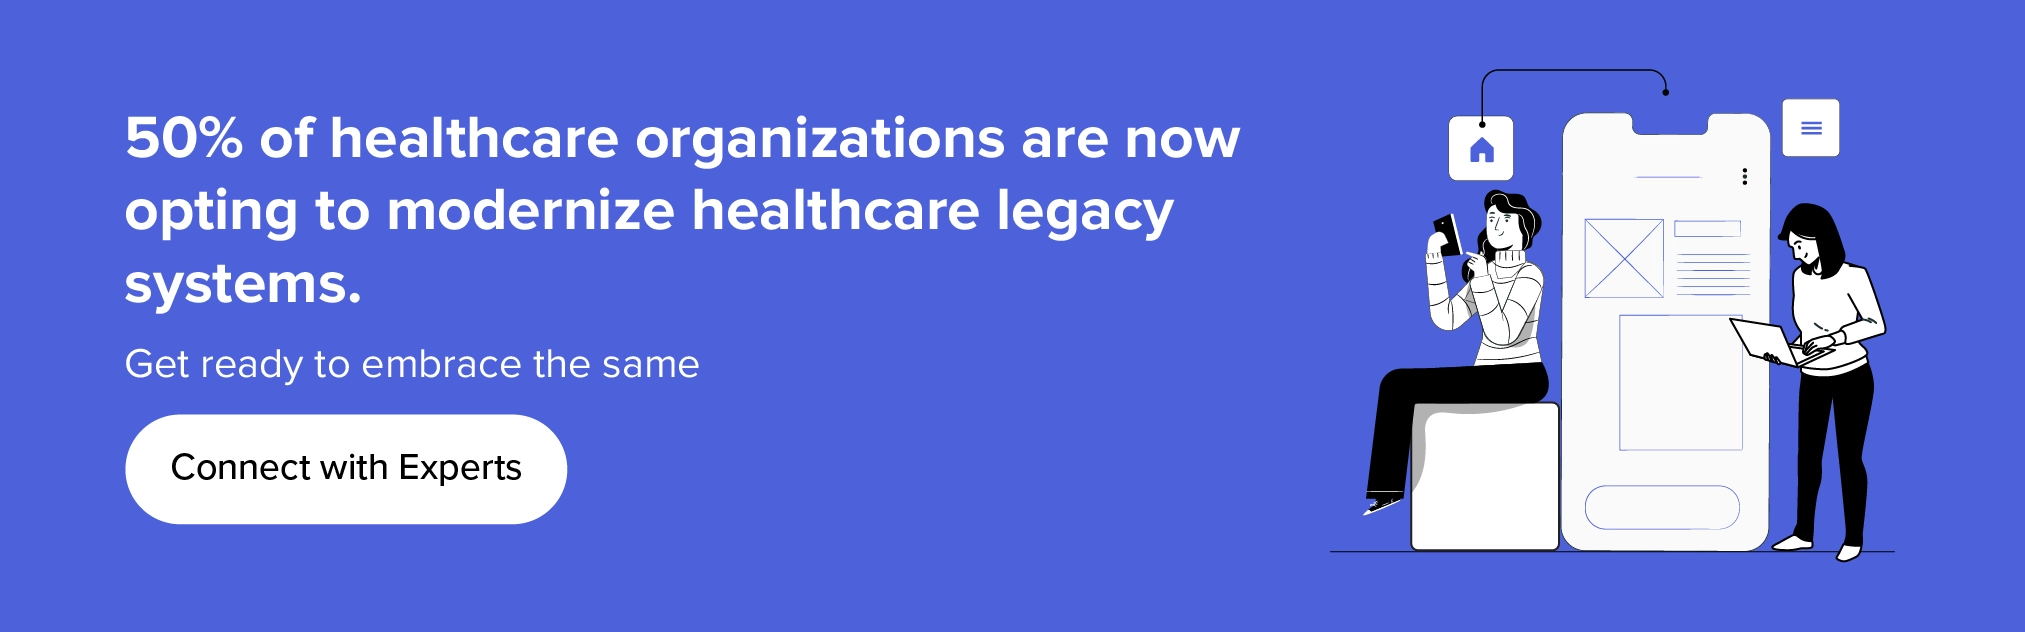 Modernize healthcare legacy systems